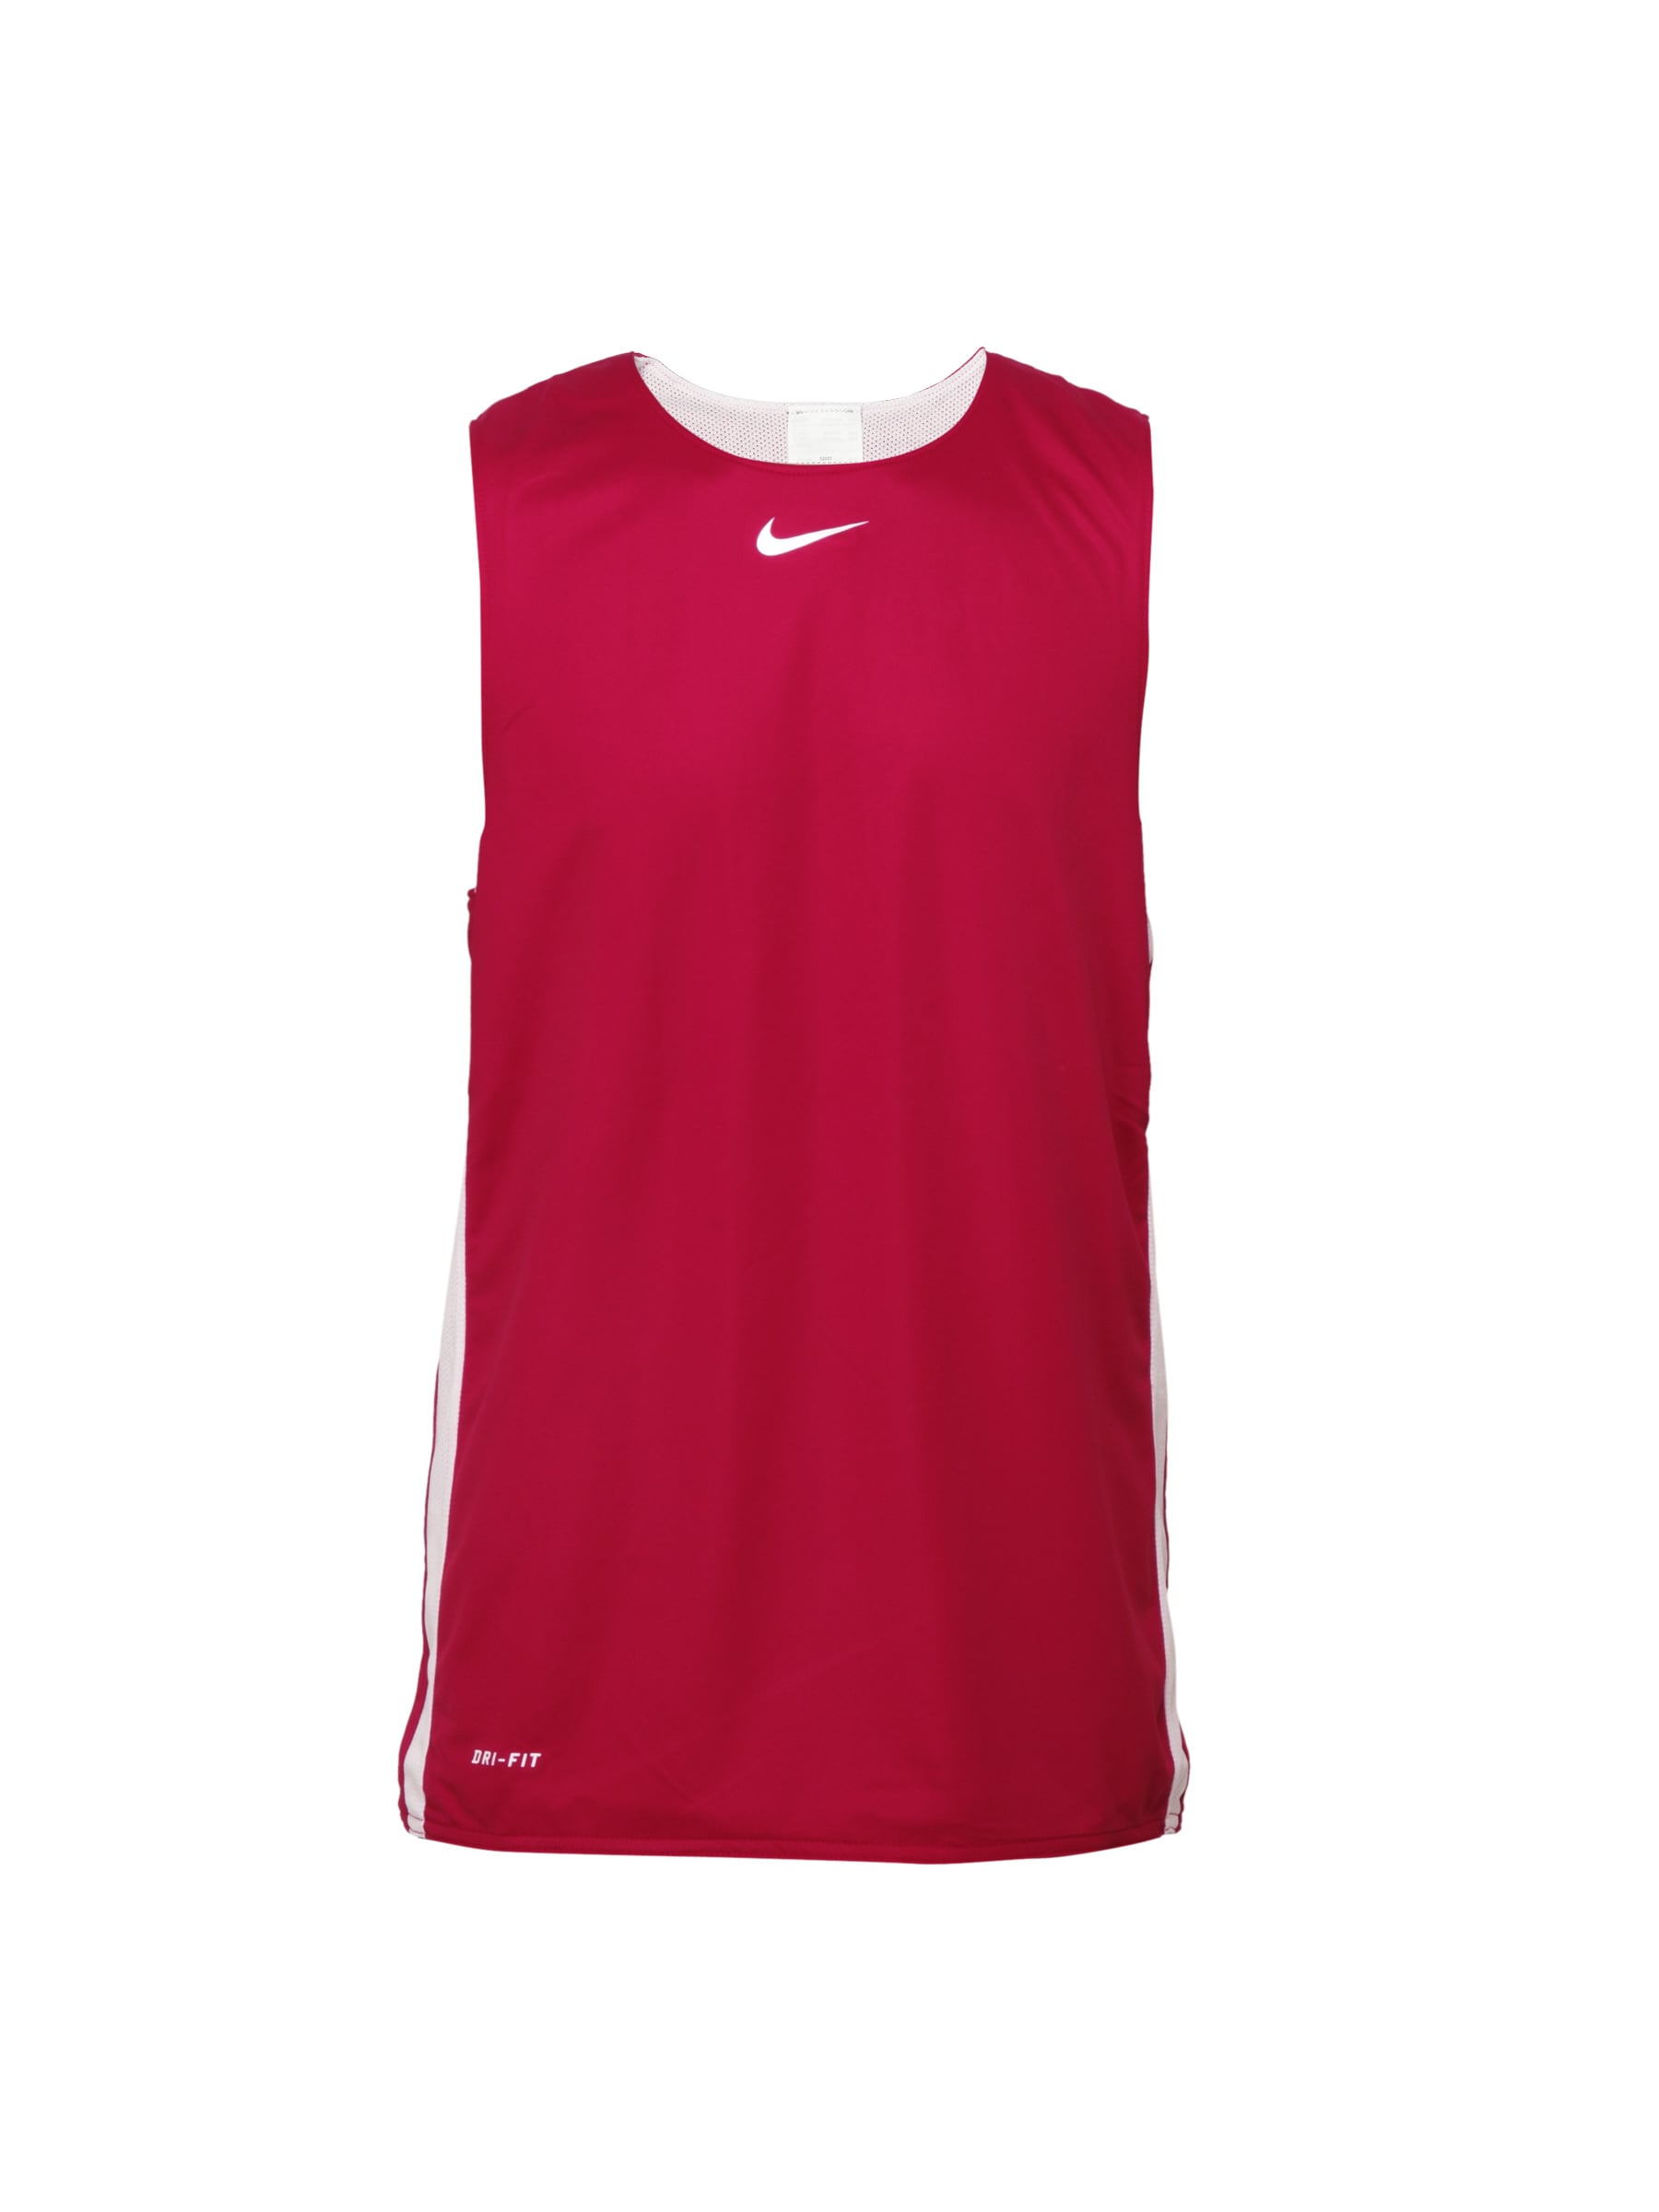 Nike Men Reversible Red T-shirt